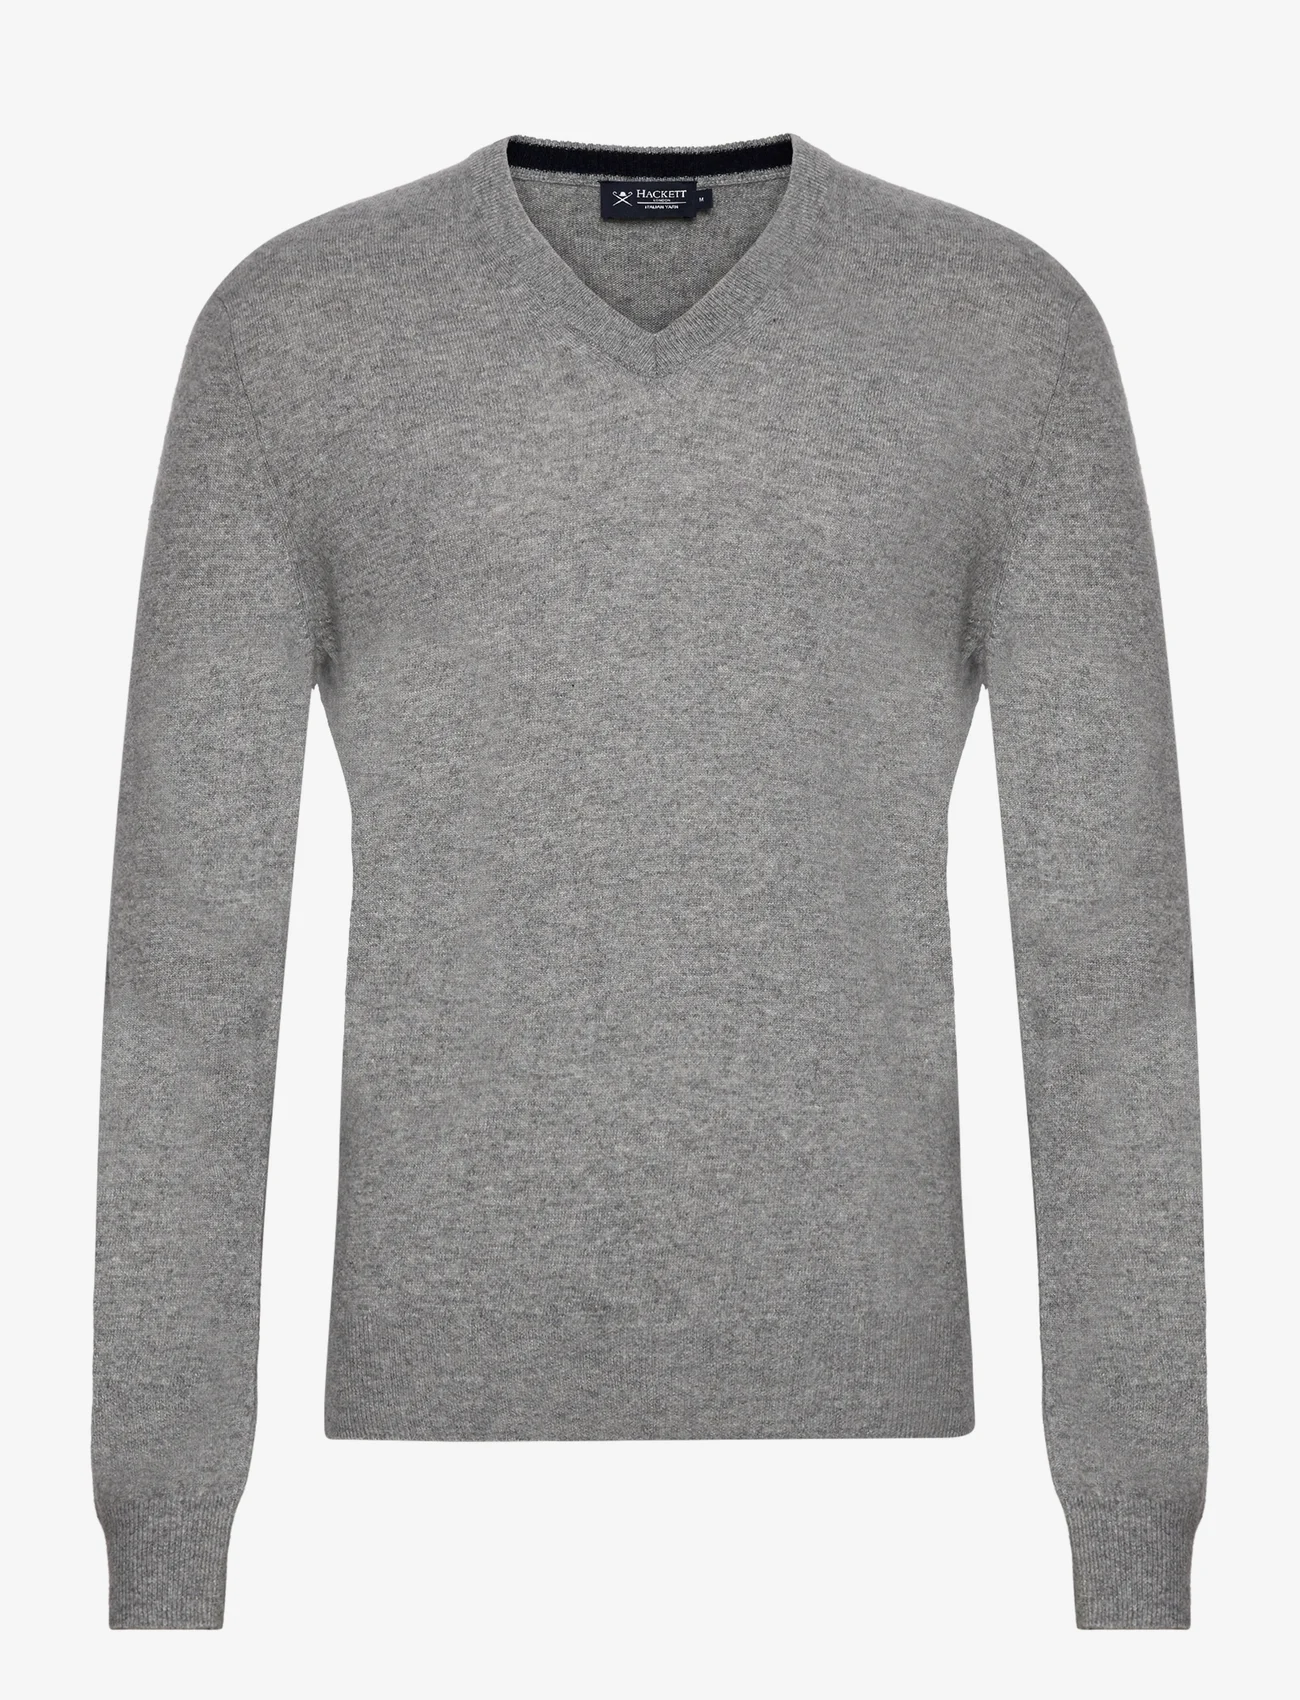 Hackett London - MERINO CASH MIX V NCK - basic knitwear - grey marl - 0